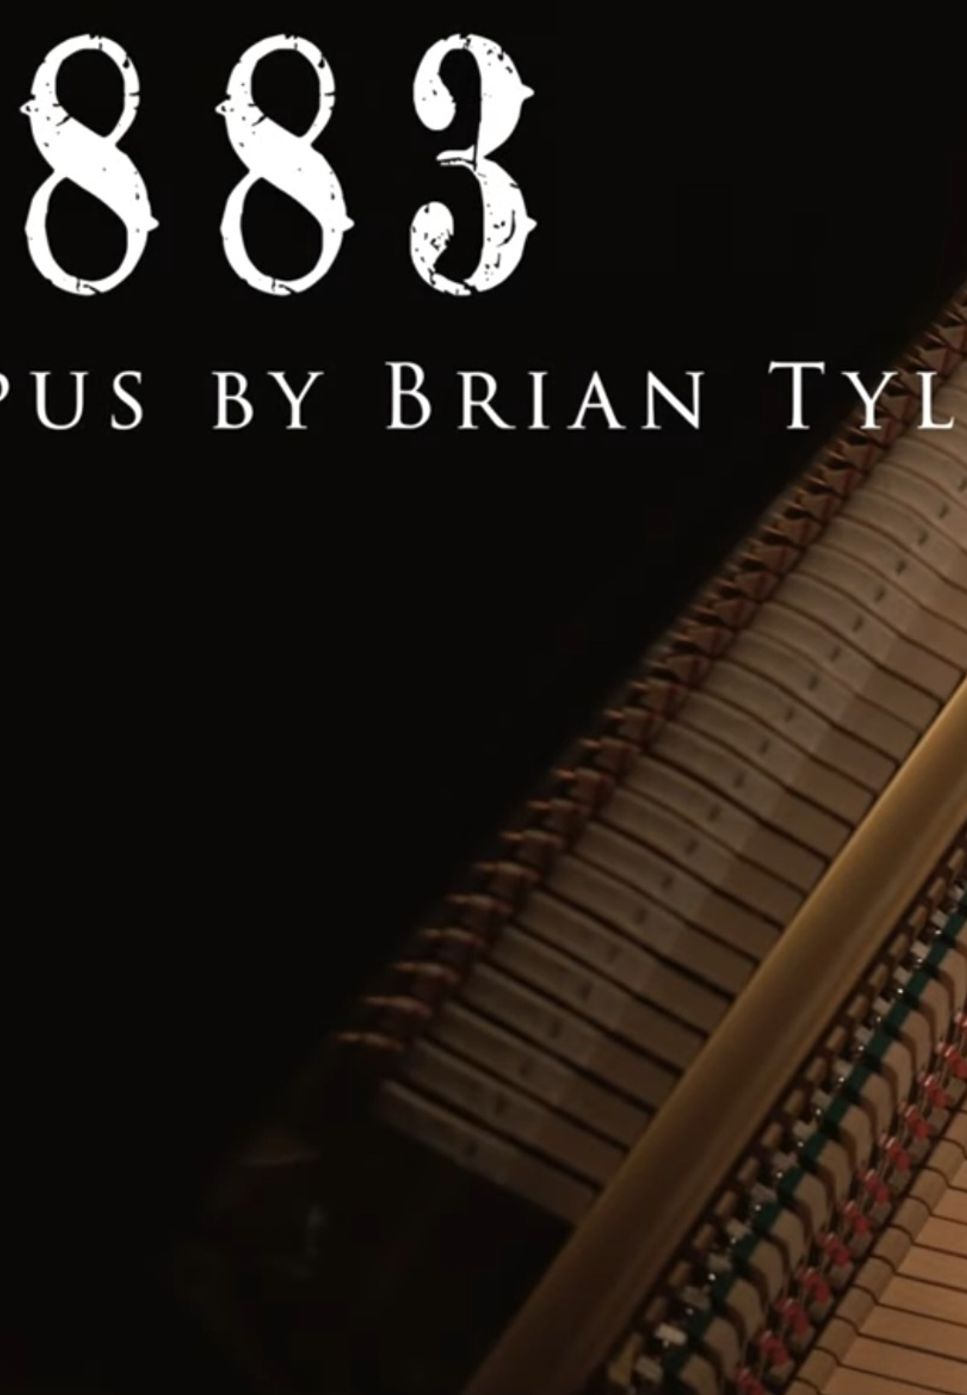 Brian Tyler - 1883 Opus (Main Title Theme) by Tyler Lyssy